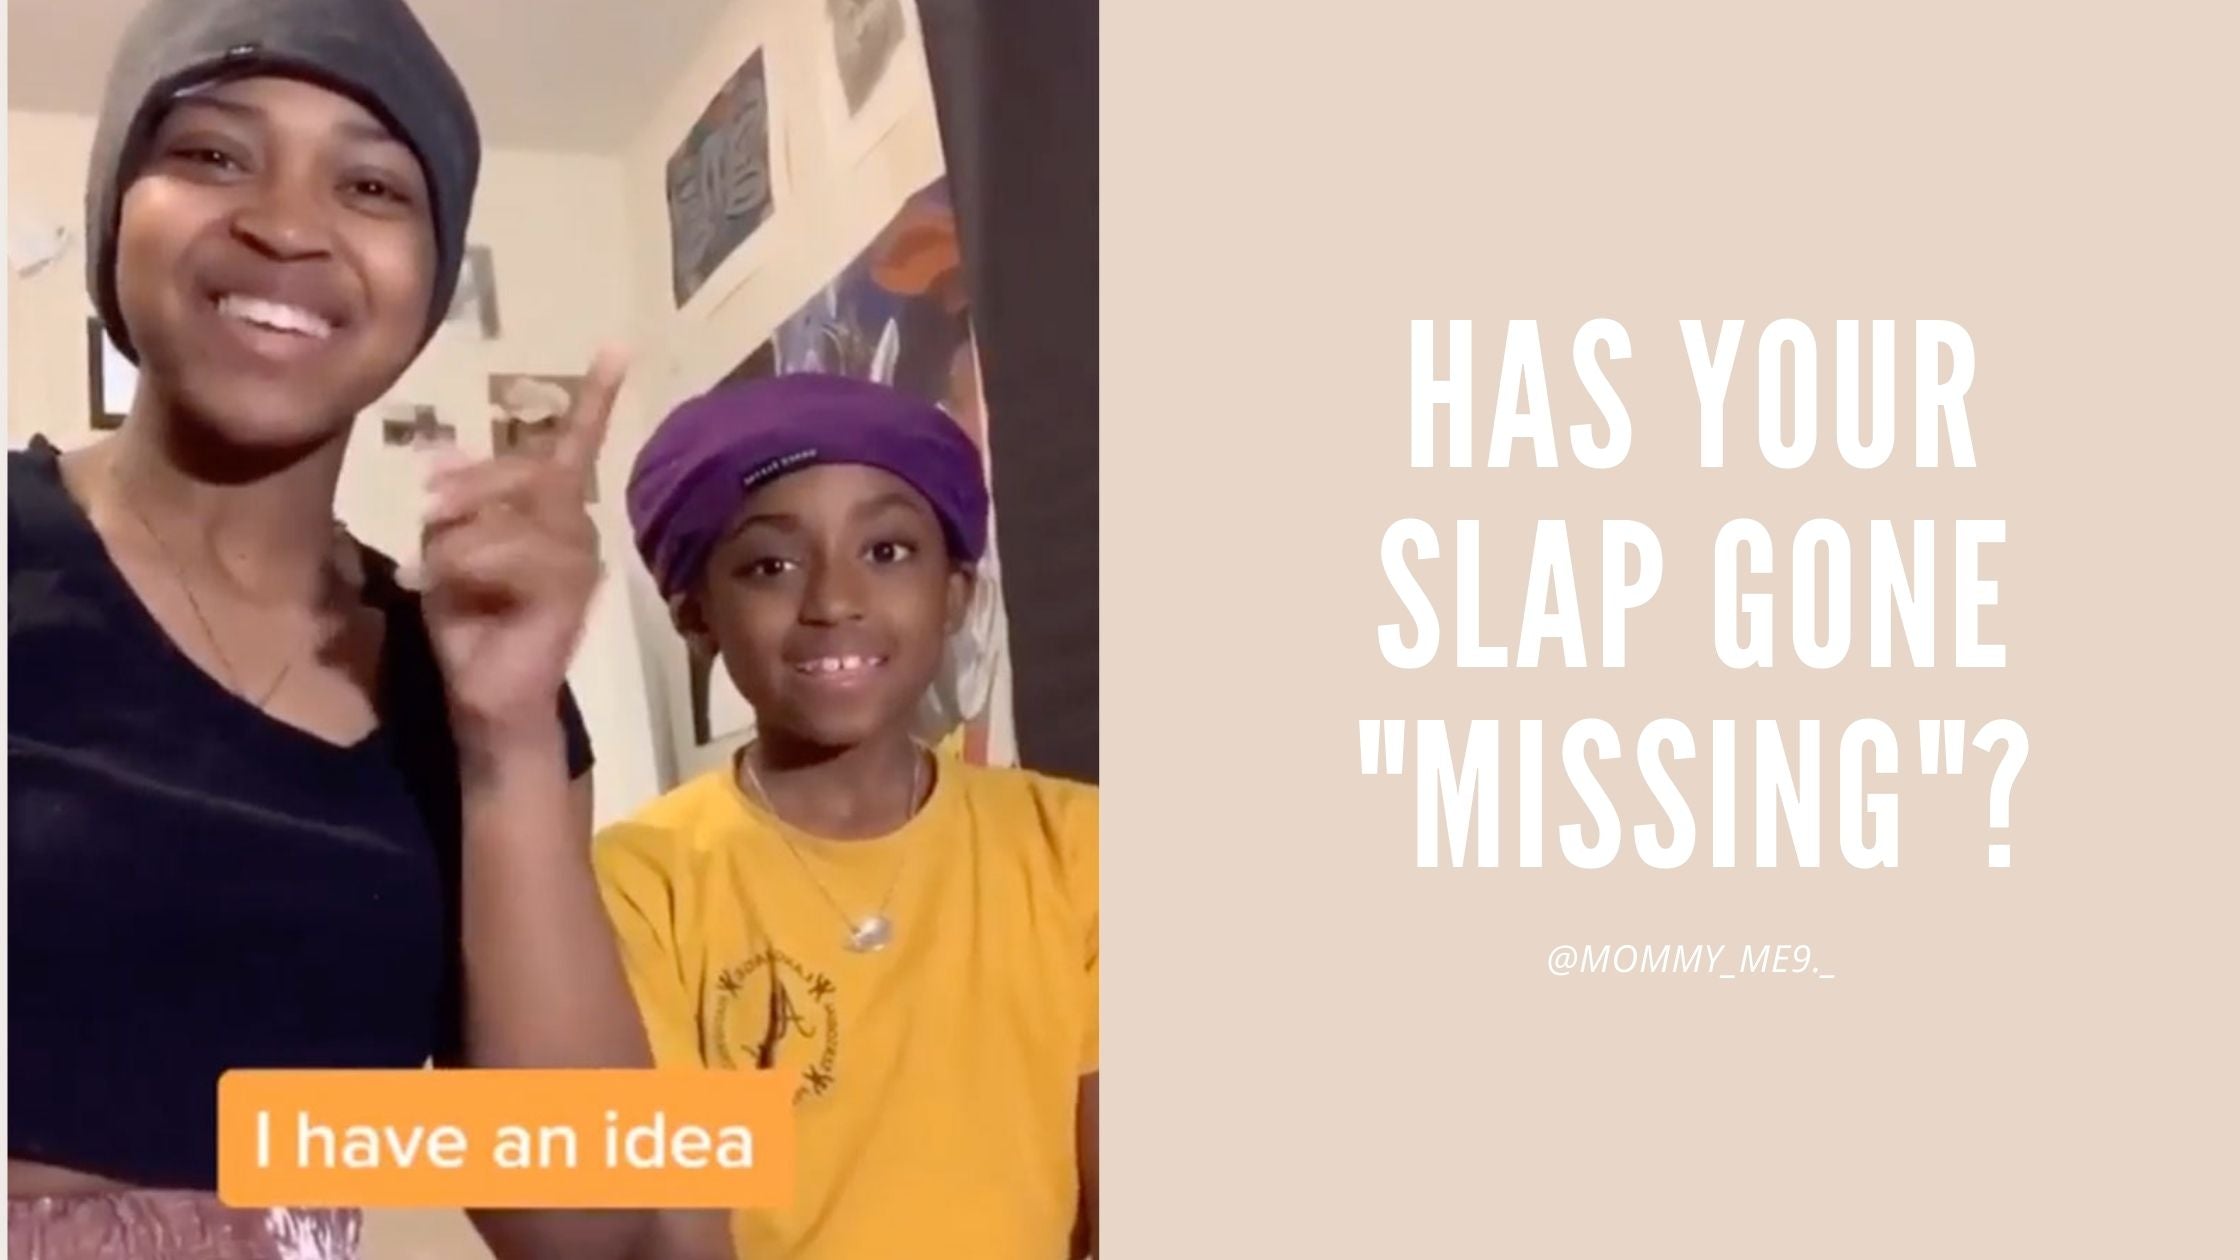 Has your slap gone "missing"?